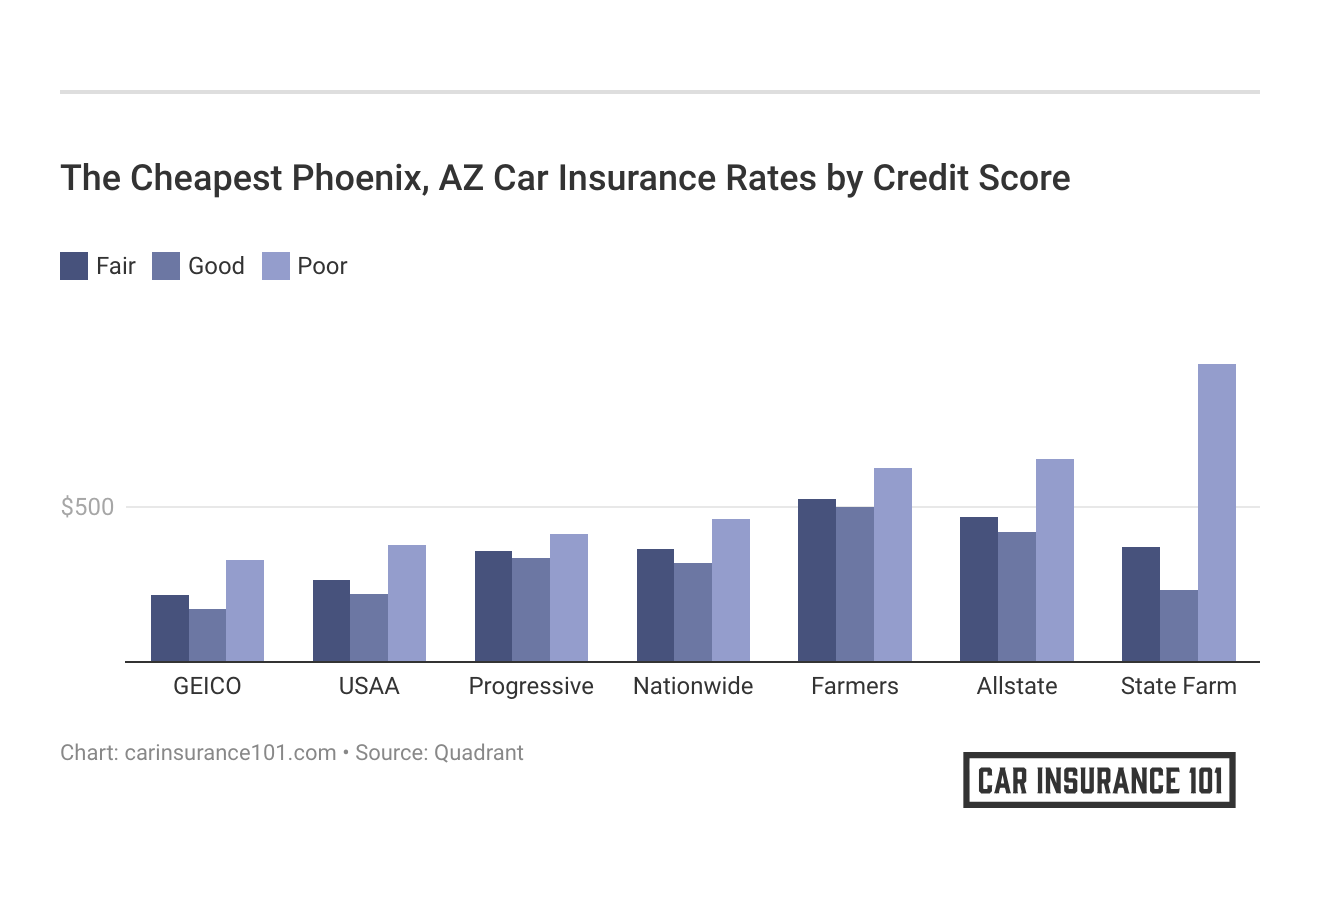 <h3>The Cheapest Phoenix, AZ Car Insurance Rates by Credit Score</h3>